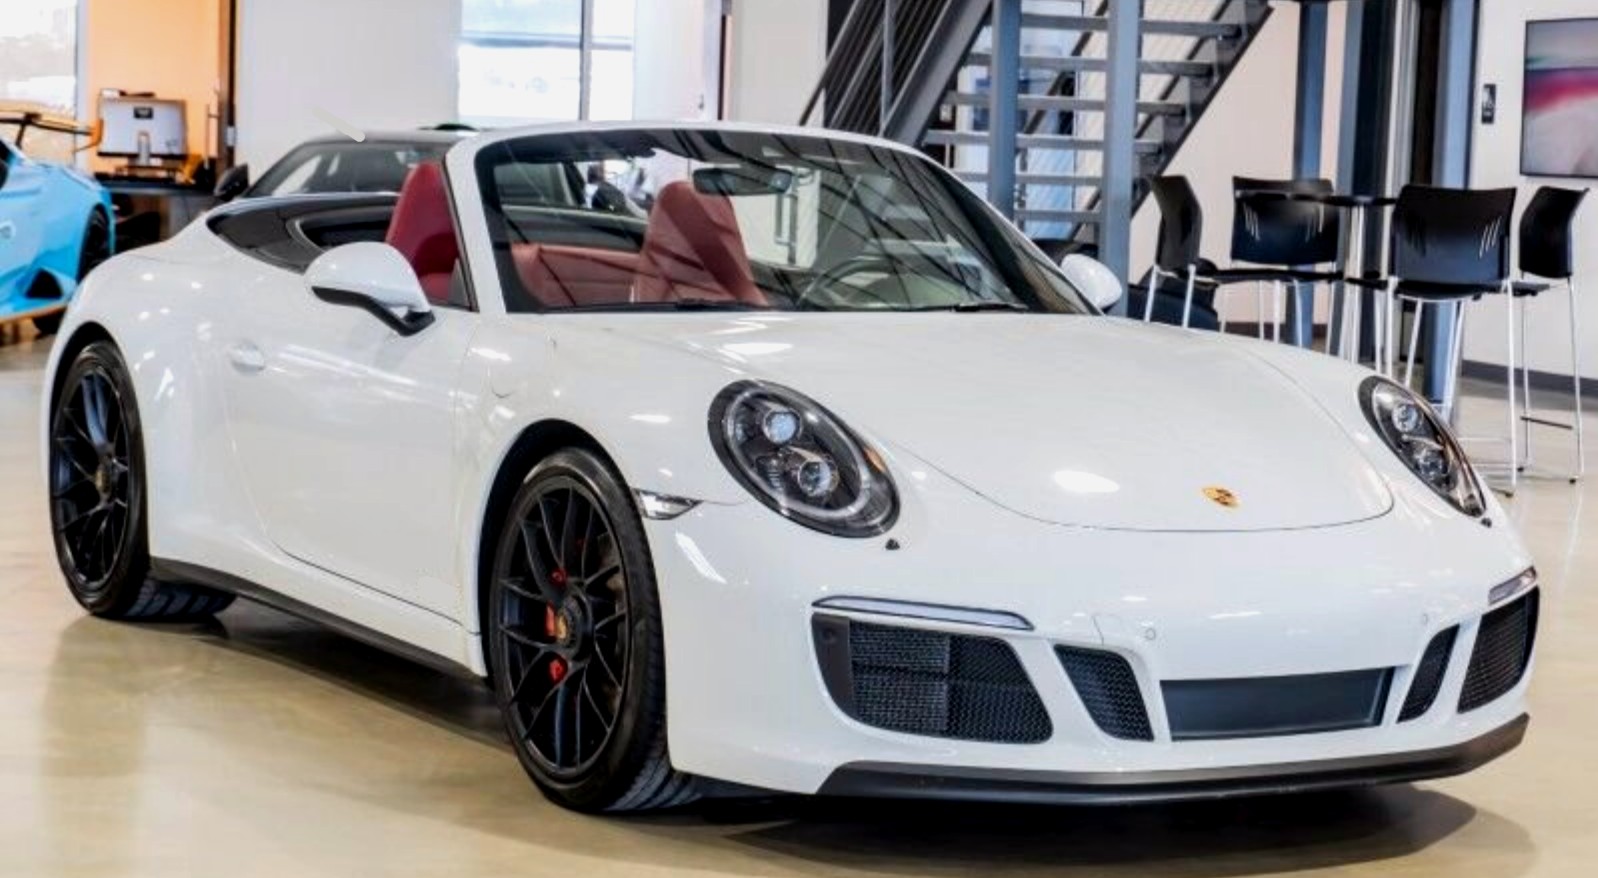 Porsche 911 Carrera Convertible Rental